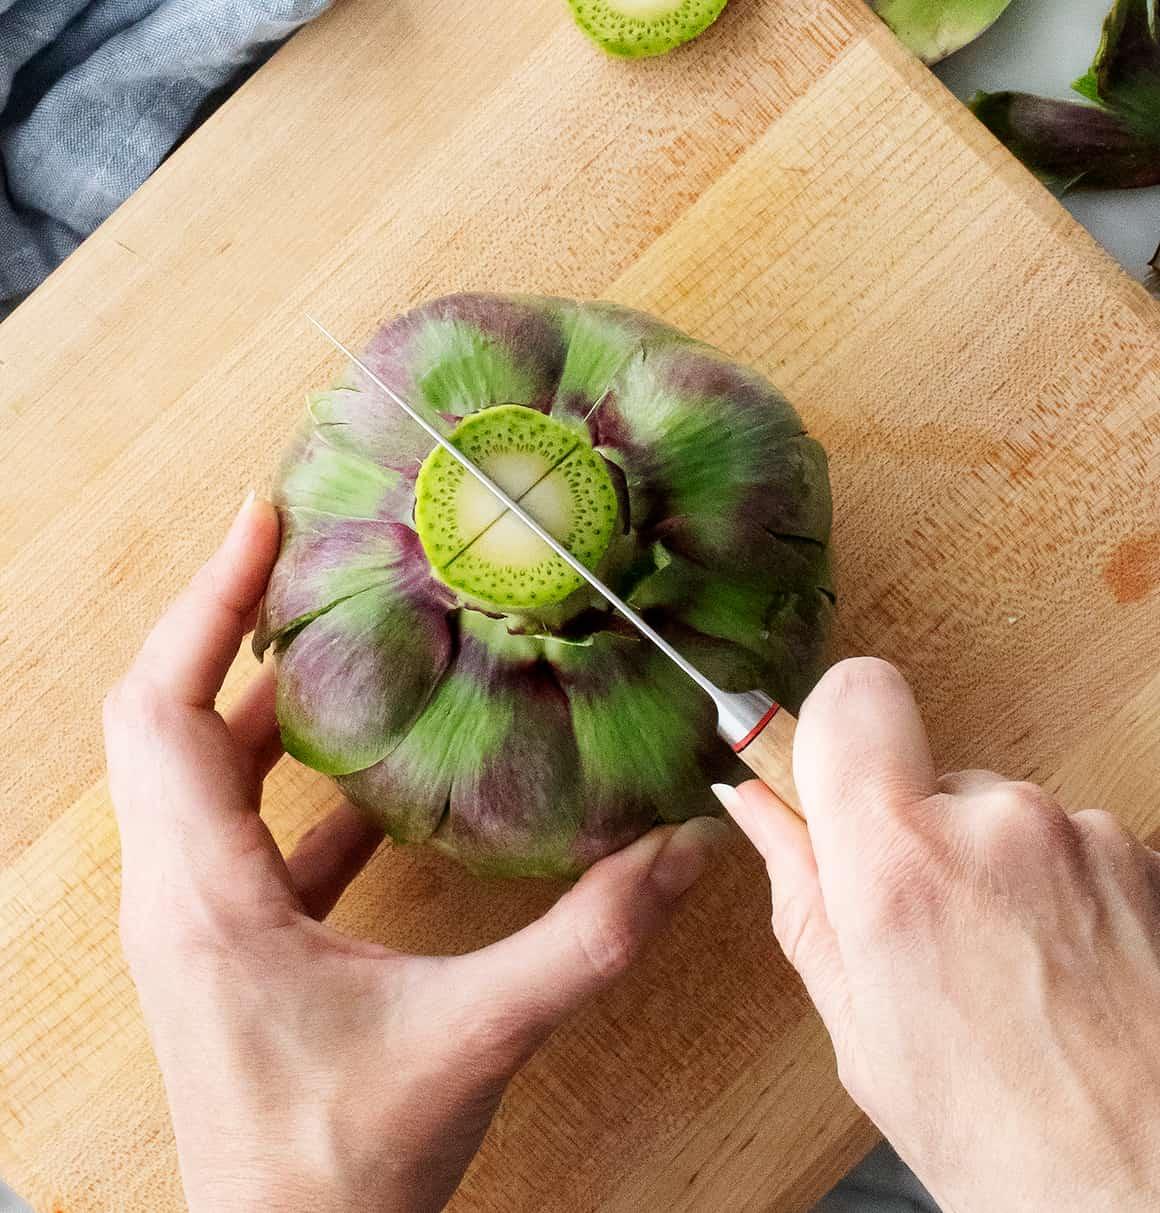 Hands scoring artichoke stem with knife